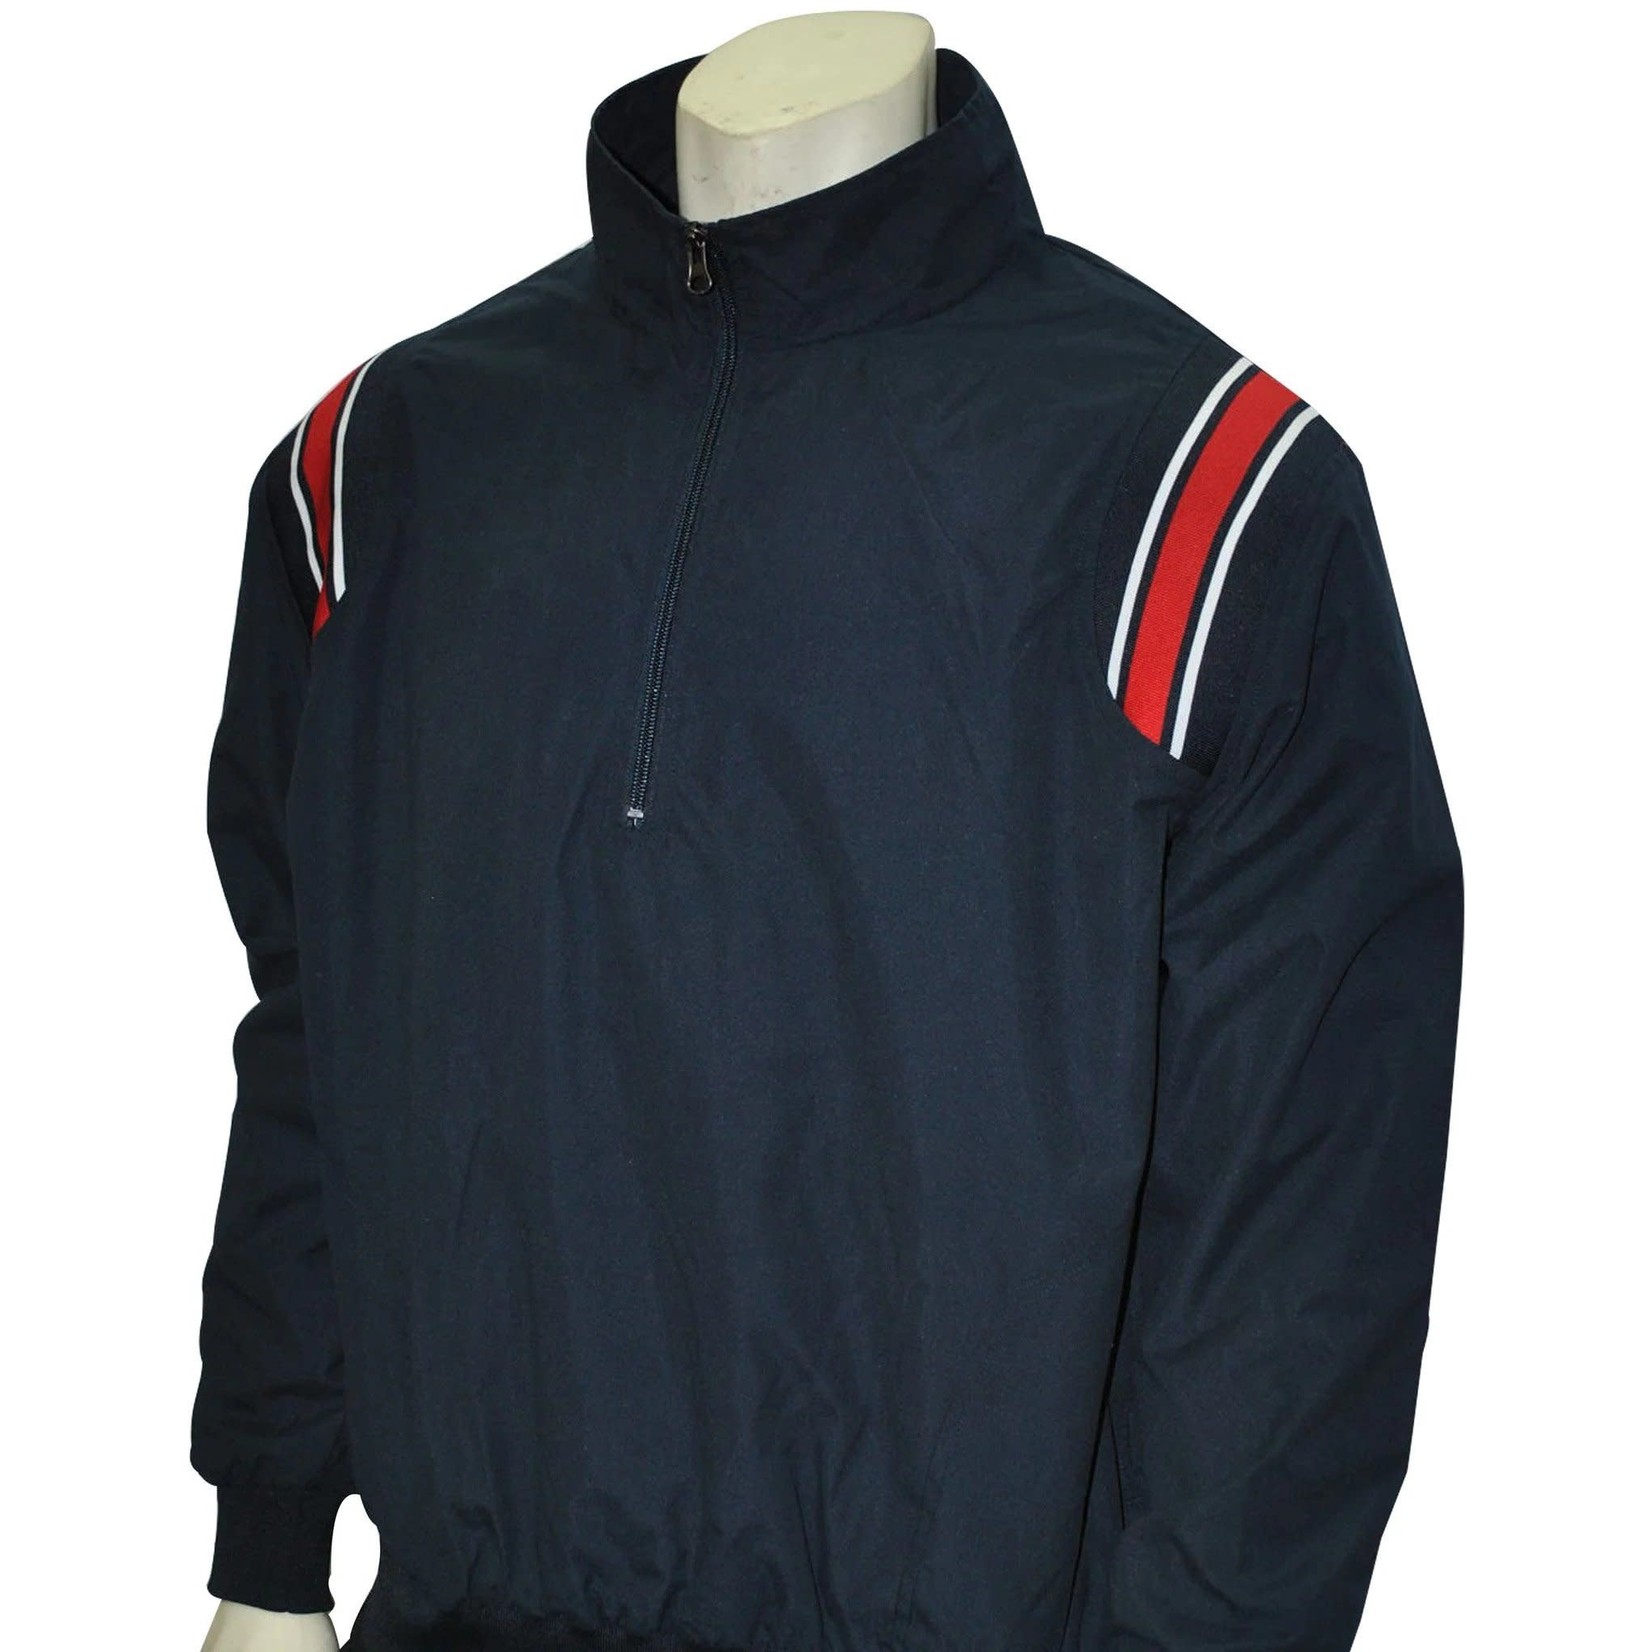 Smitty Smitty Umpire Half Zip Pullover Jacket Navy w/ Red Stripes